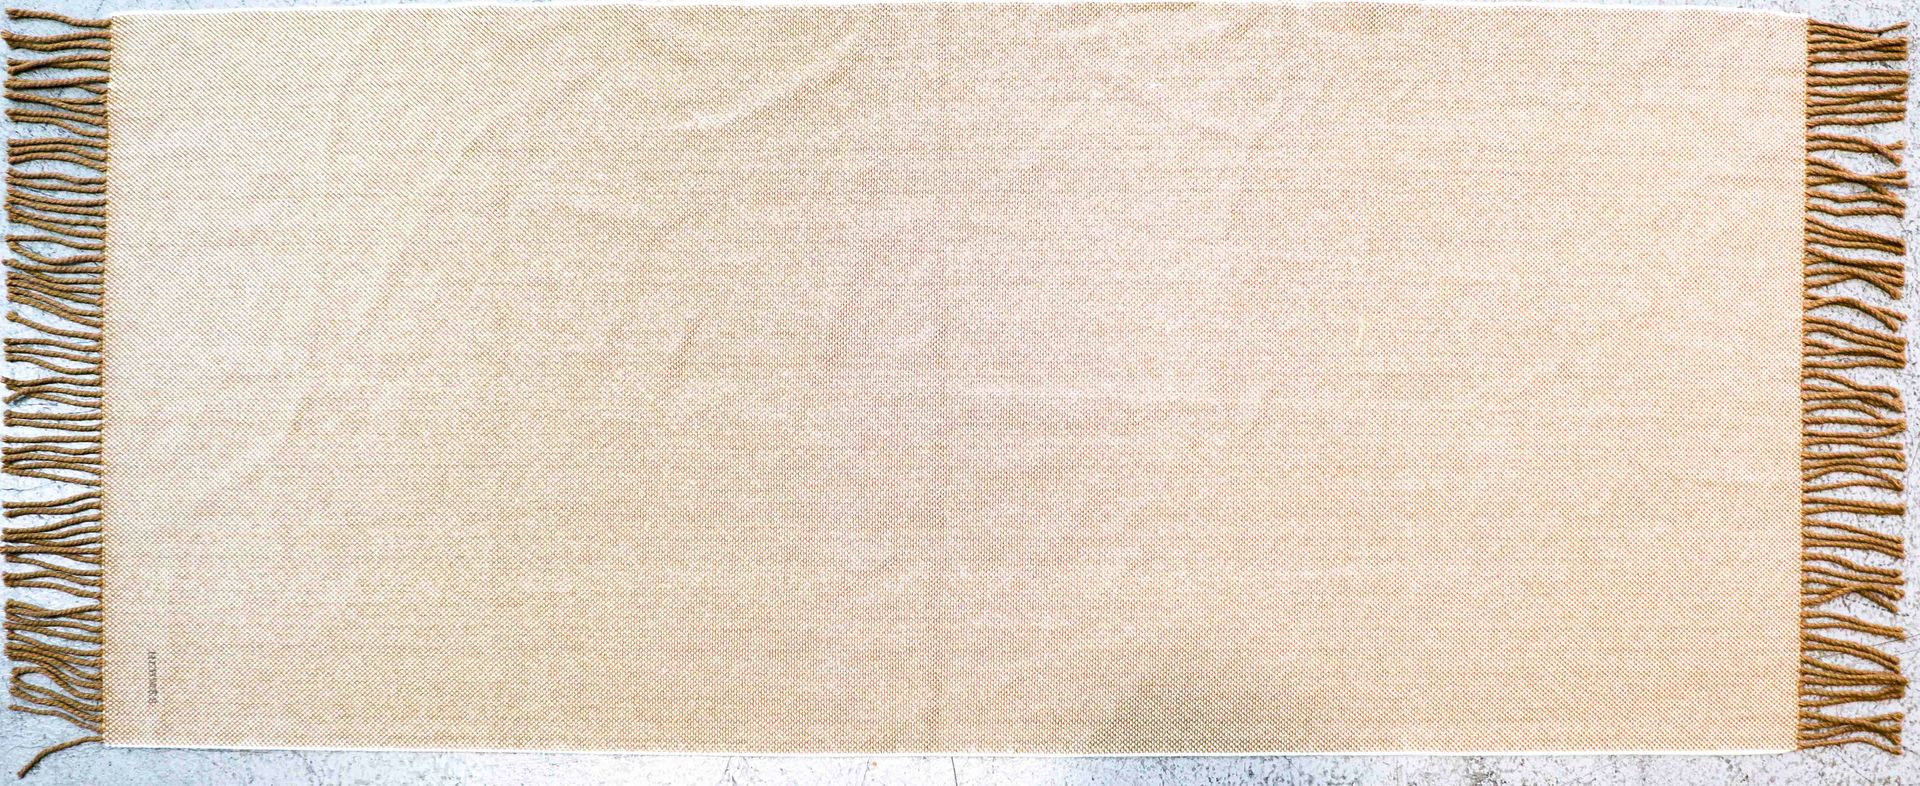 Null HERMES. Plaid in lana scozzese beige ed ecru con frange - 175 x 76 cm (fran&hellip;